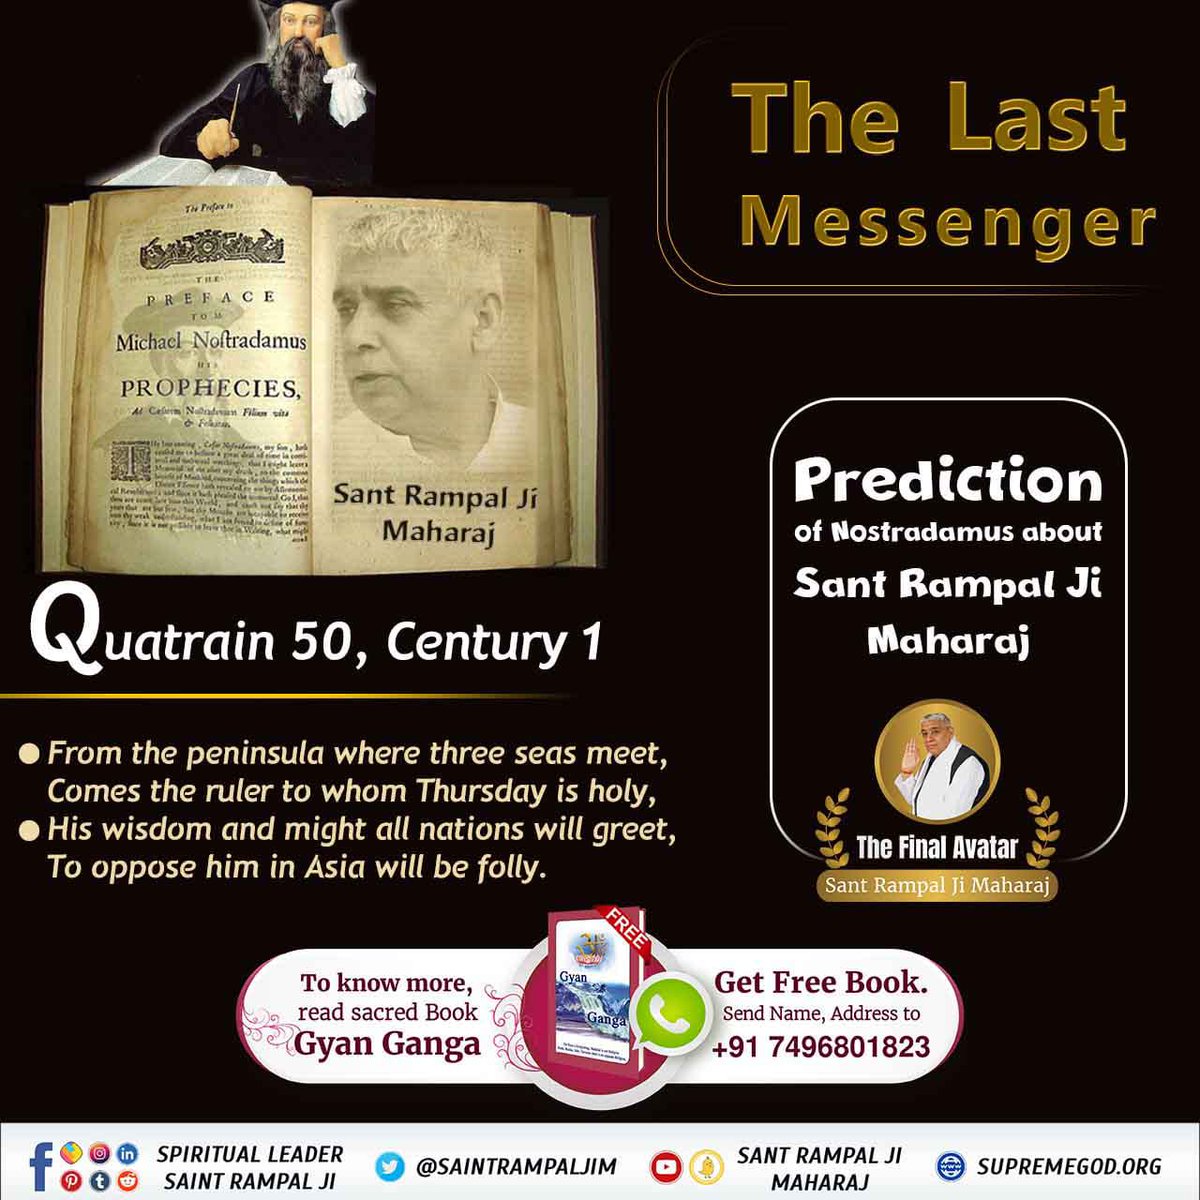 The Last Messenger 
Prediction of nostradamus about sant Rampal Ji Maharaj 
Quatrain 50, Century 1

#आदि_सनातनधर्म_होगाप्रतिष्ठित

Sant Rampal Ji Maharaj